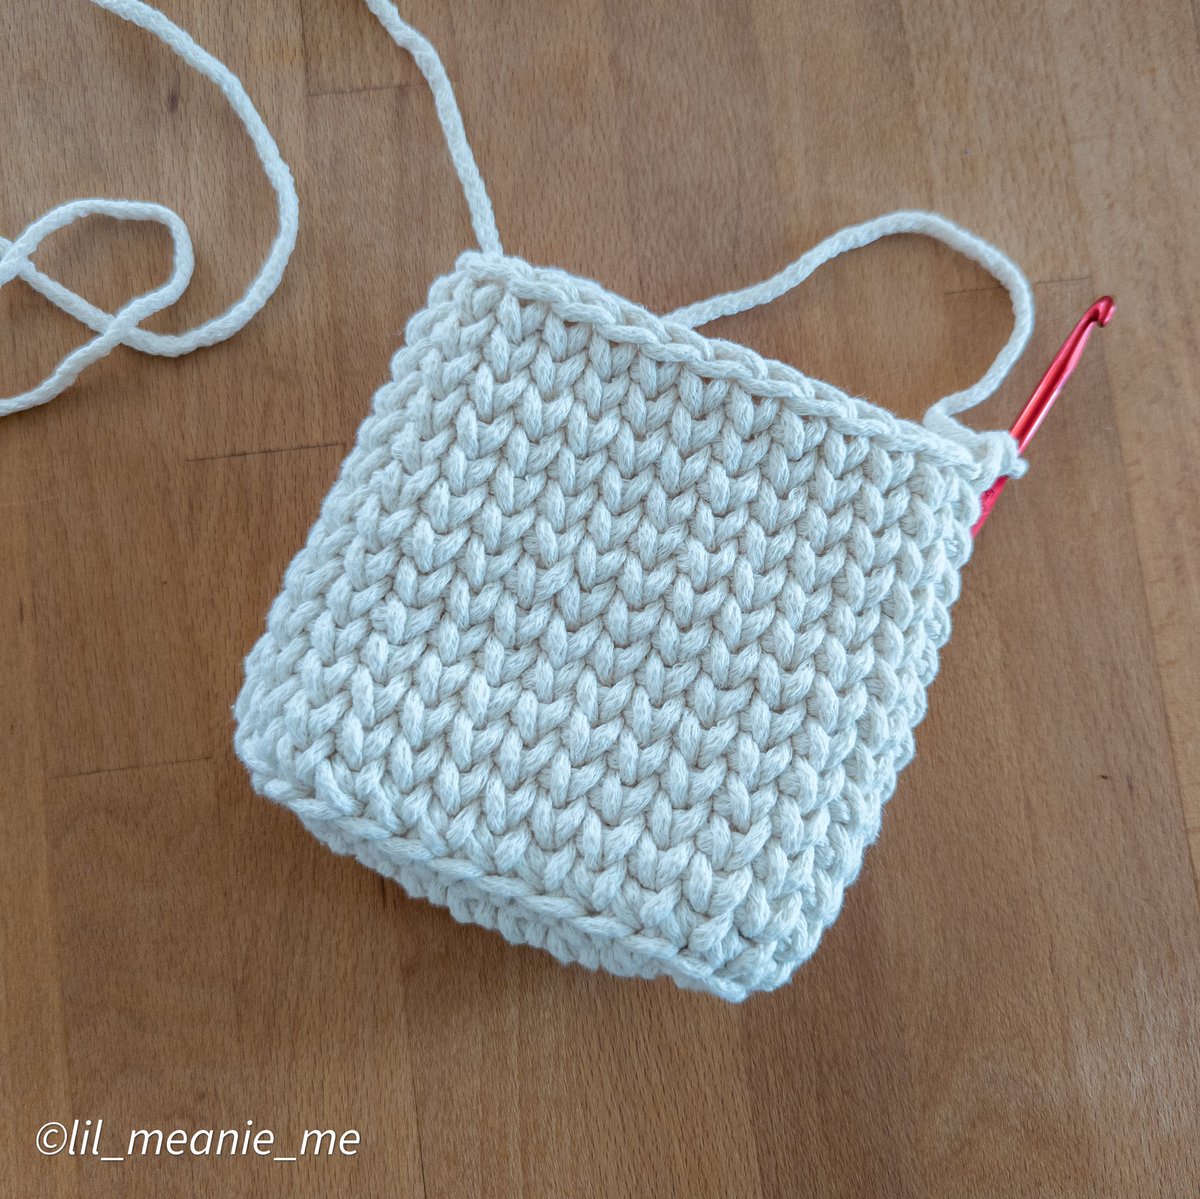 A small bag... in progress 😛 🧶👜
#crochet #crochetbag #lovecrochet #crochetfun #crochetlove #yarnlove  #crochetterapy #yarn #handmade #craft #diy #häkeln #szydełko